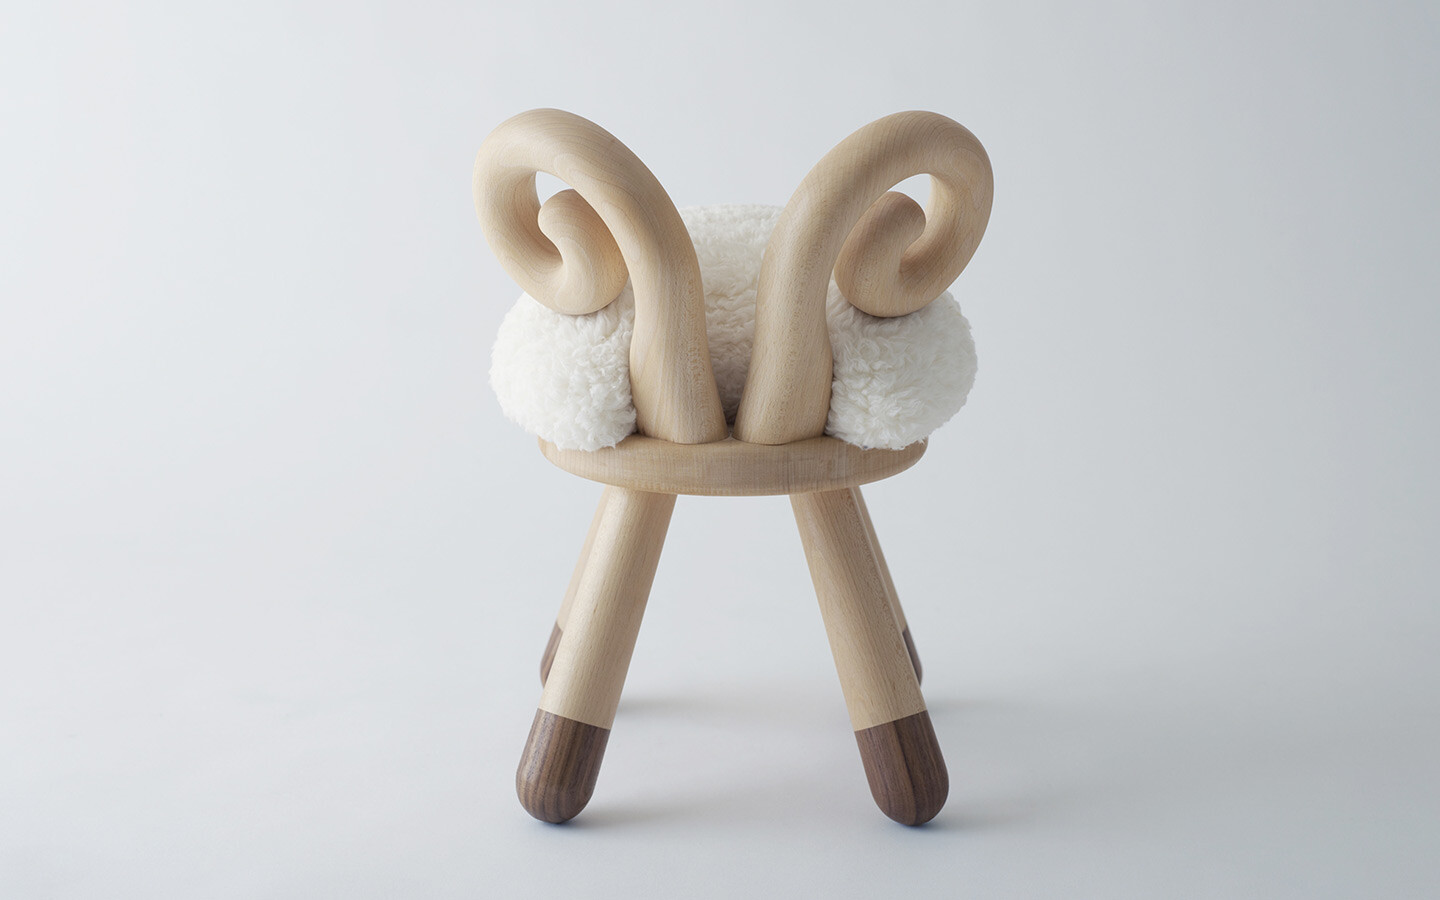 Collection of chairs Takeshi Sawada bring joy to children - HomeWorldDesign (7)